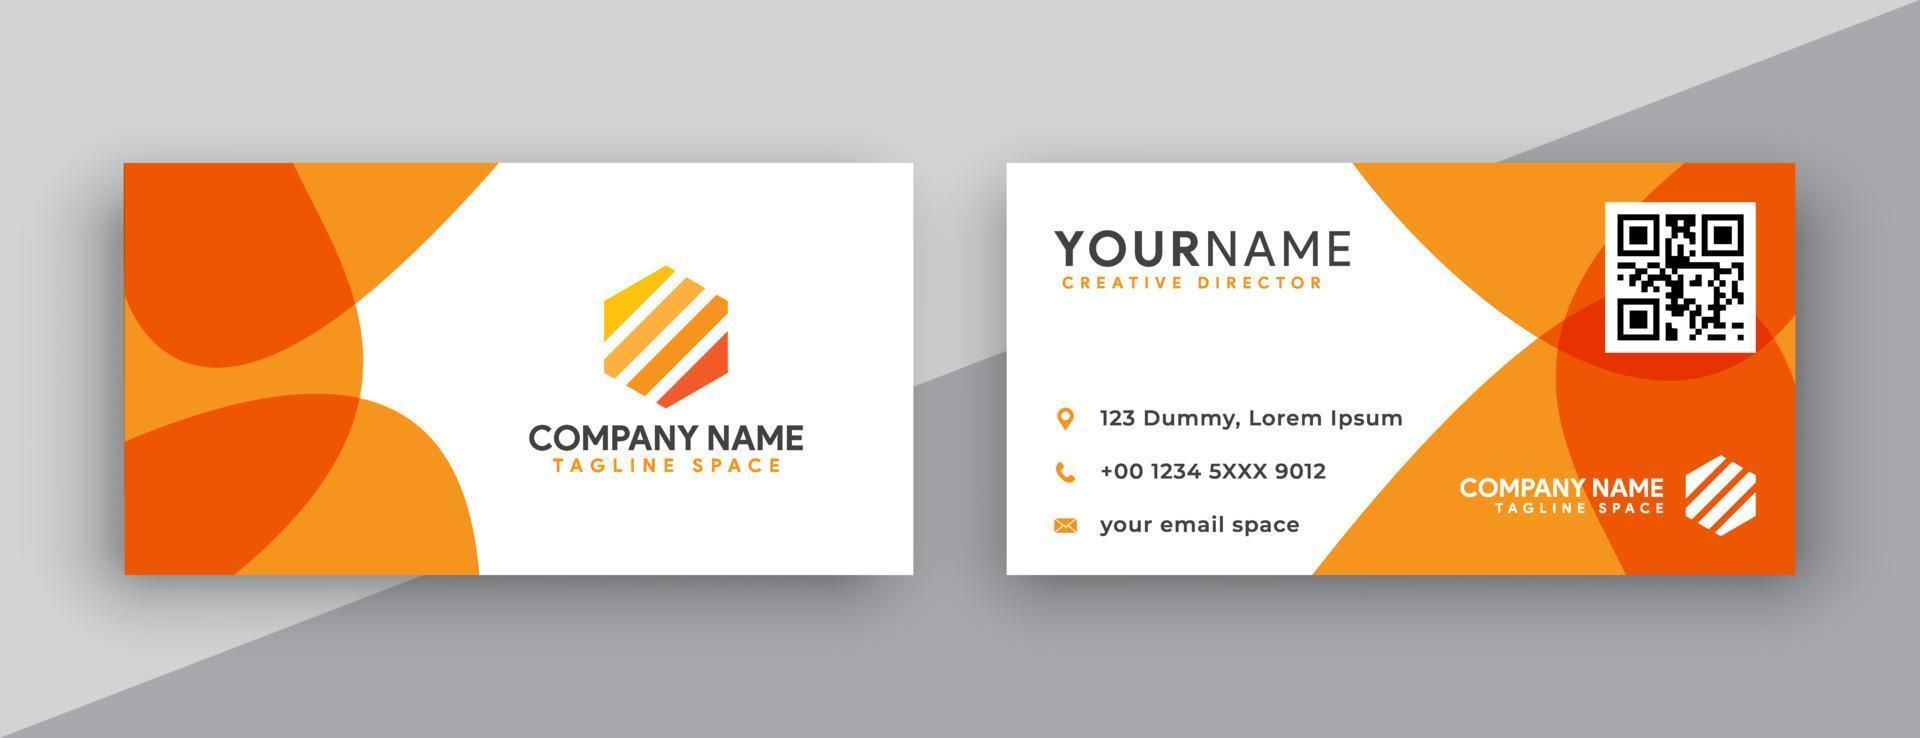 modern business card design . double sided business card design template . flat orange gradation business card inspiration vector